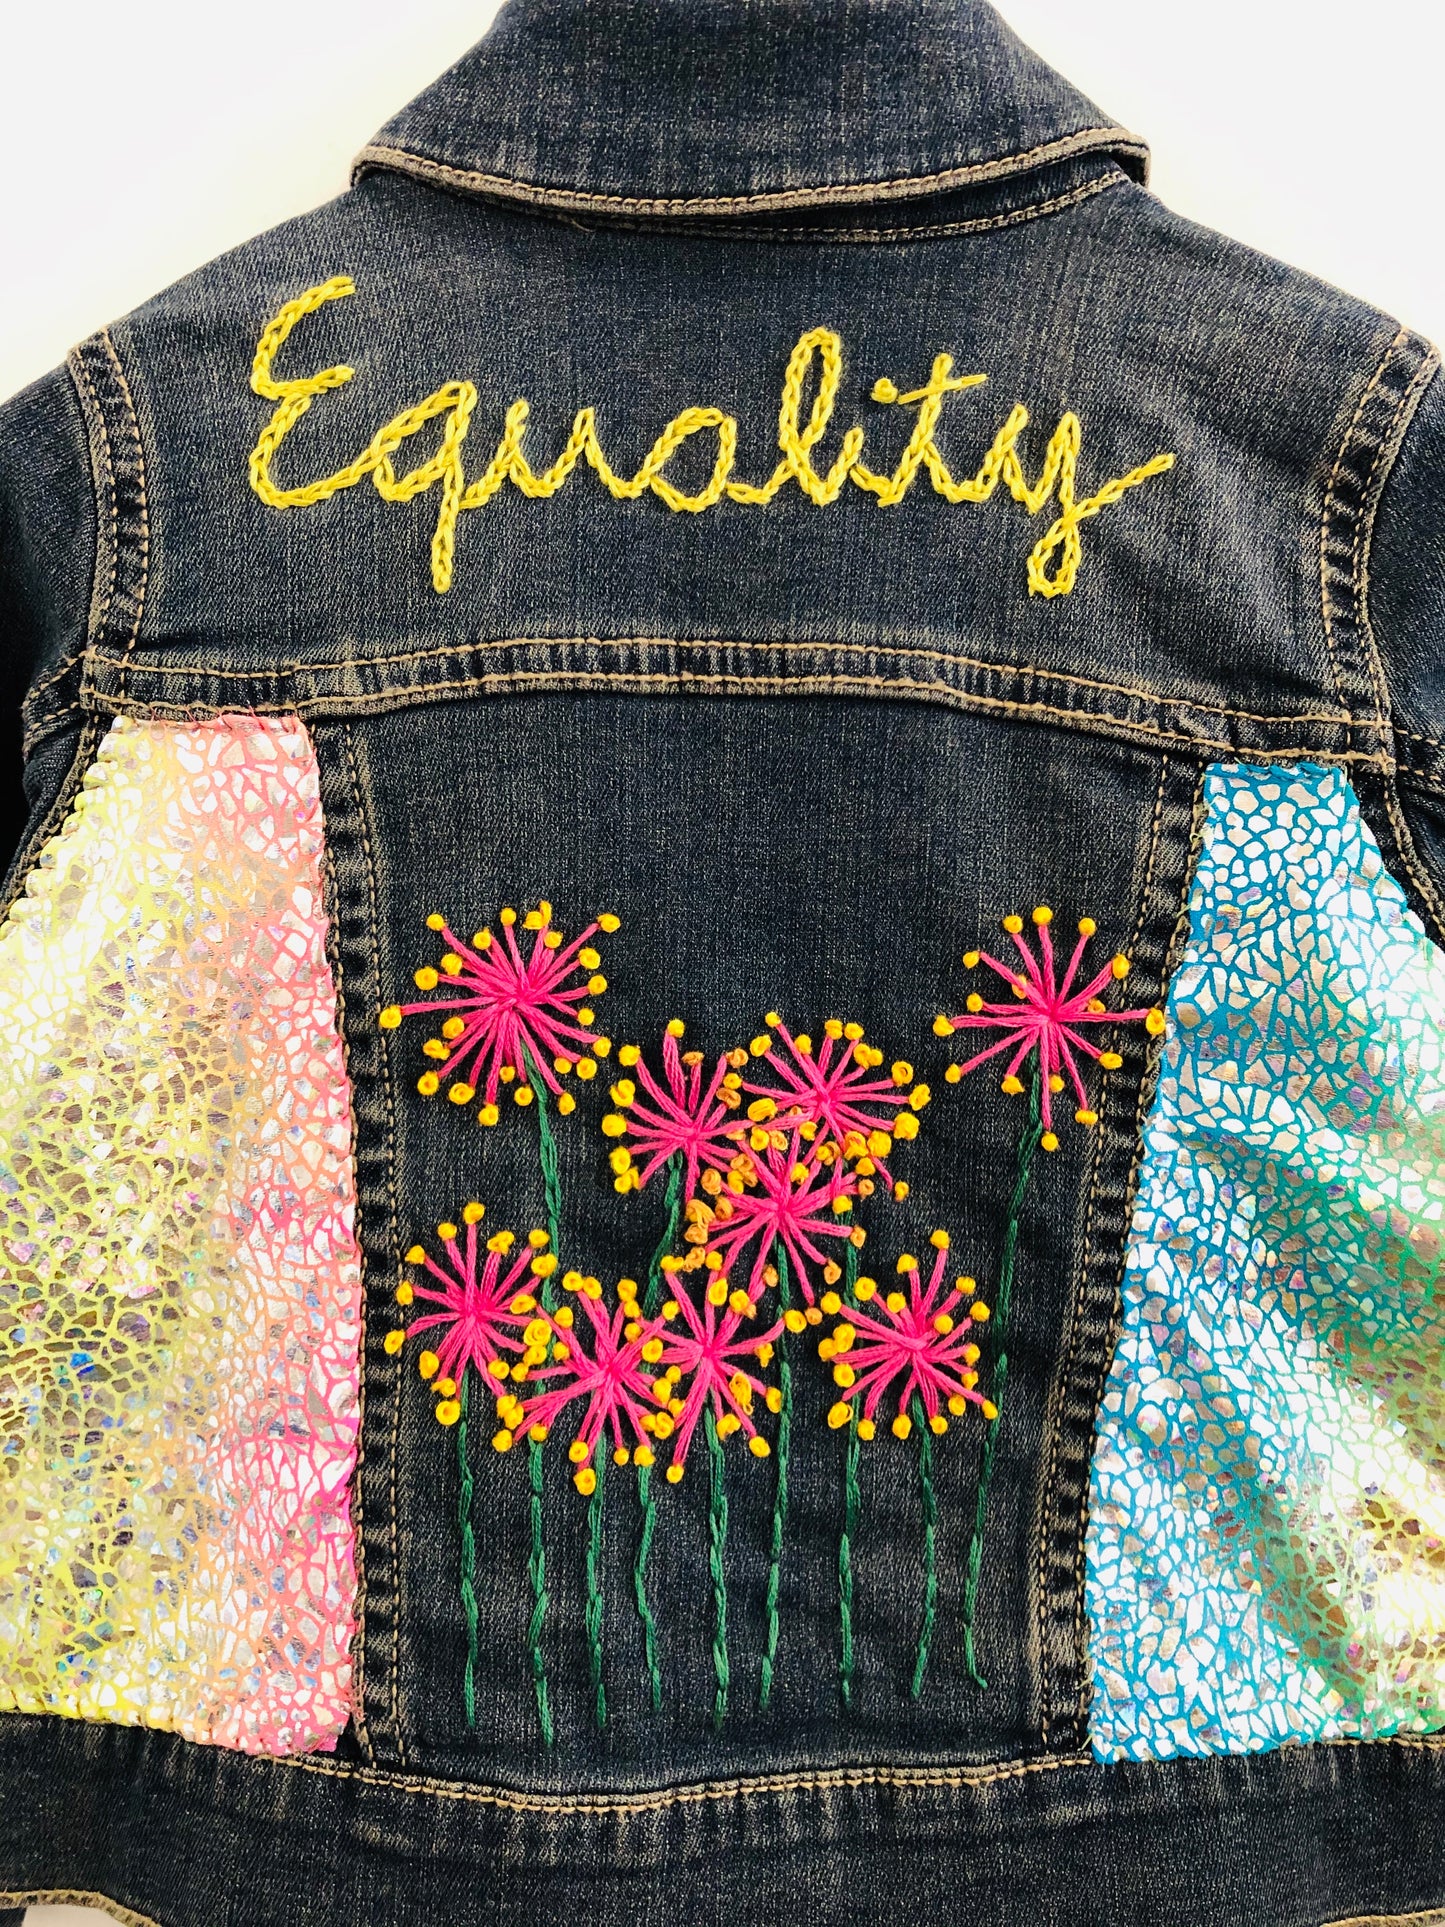 "Equality" Embroidered DenimJacket / 3T